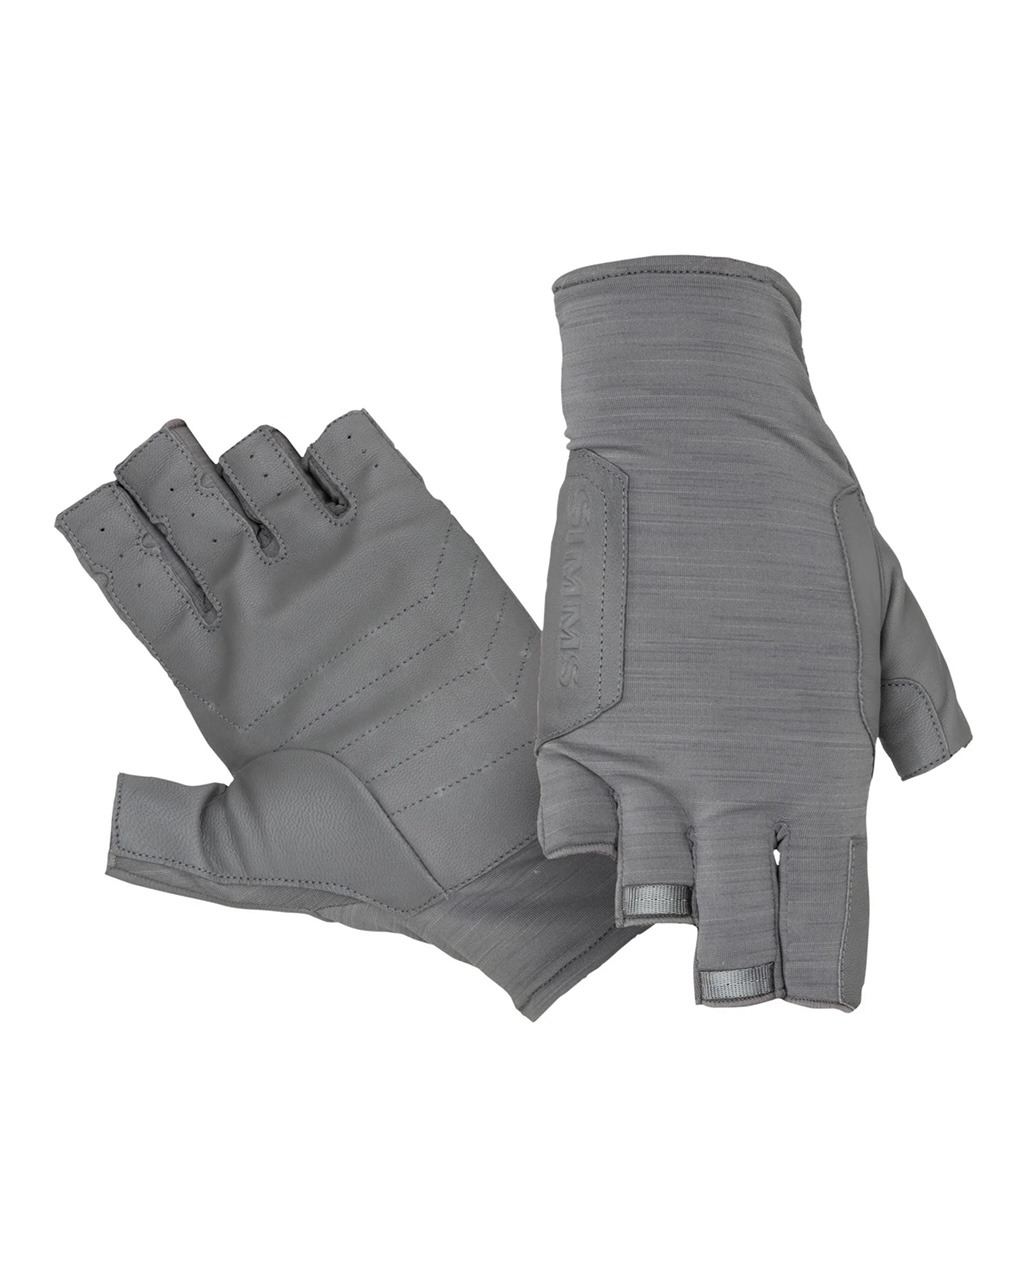 Simms Solarflex Guide Glove - Sterling - Medium